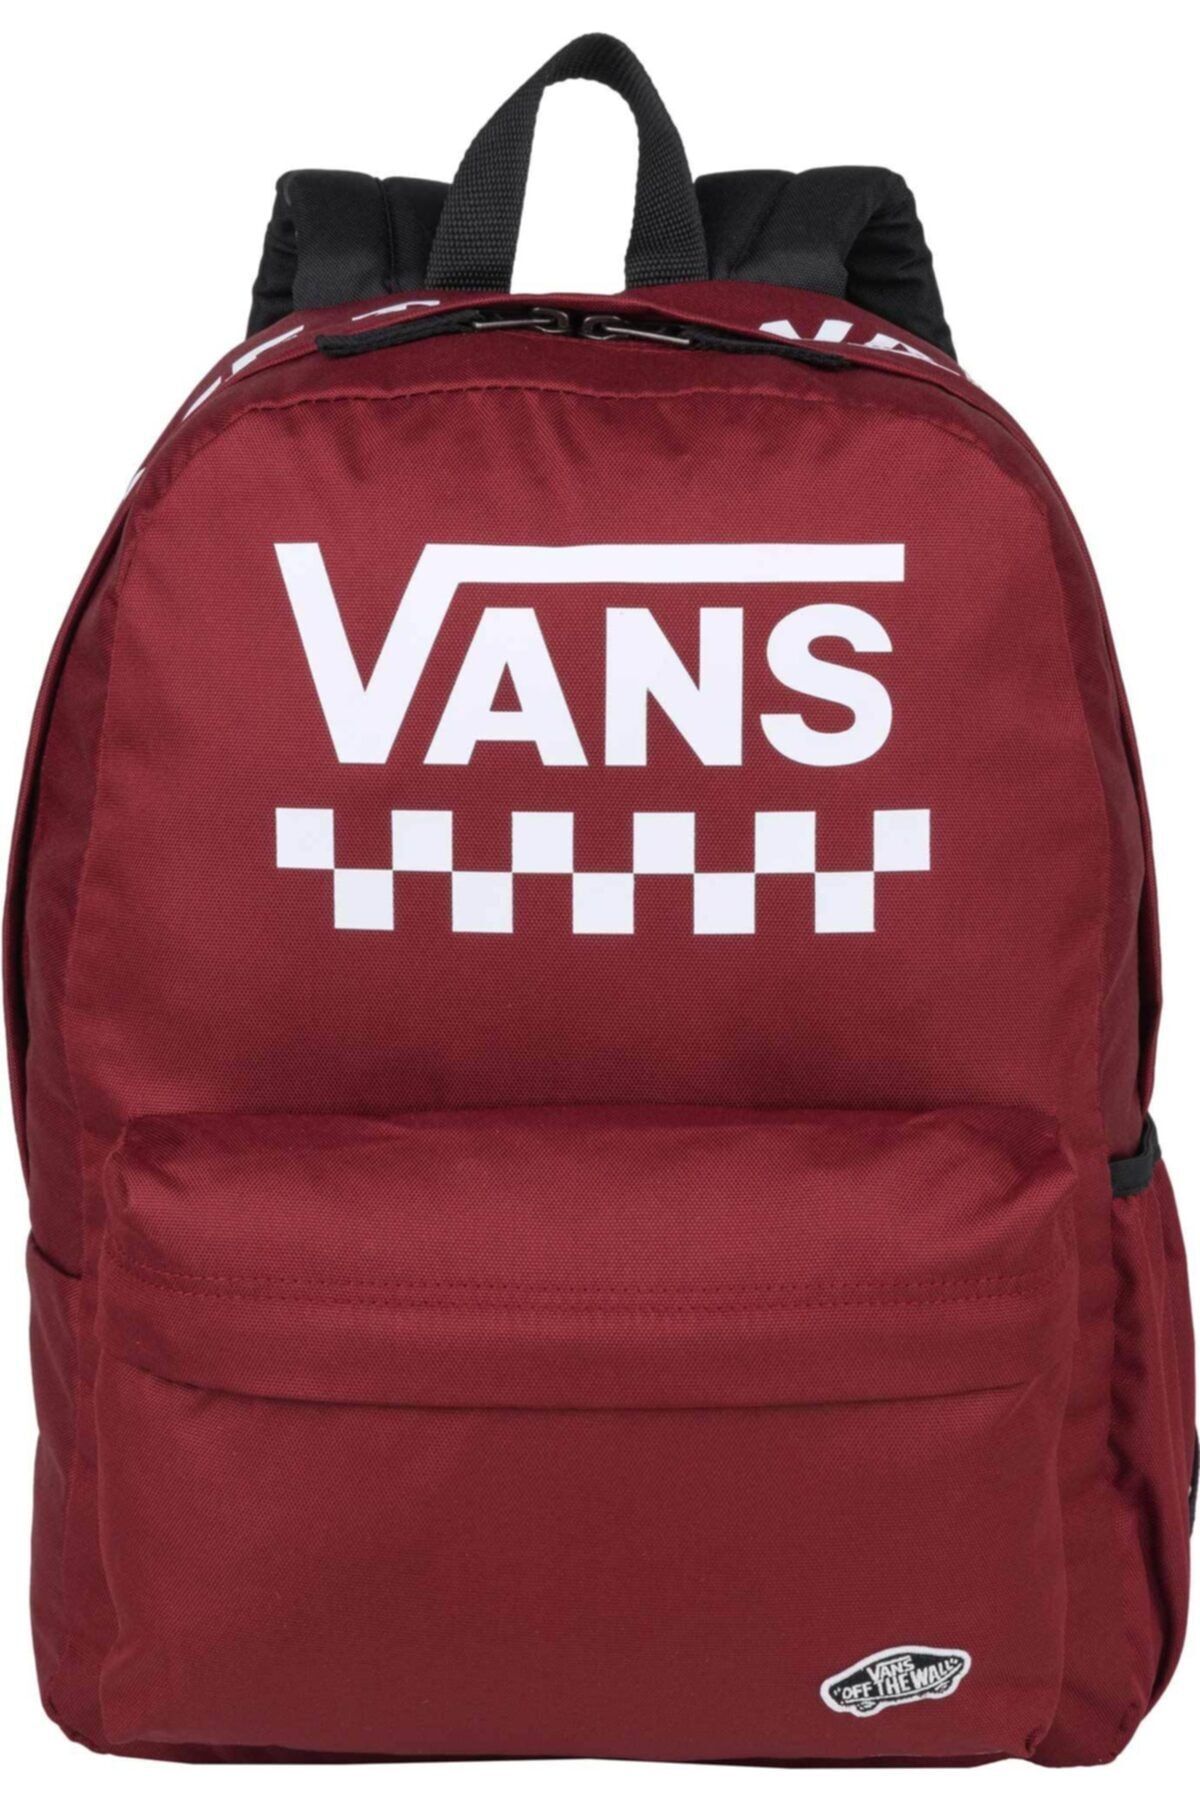 Vans Wm Street Sport Realm Backpack Kadın Kırmızı Sırt Çantası Vn0a49zjzbs1